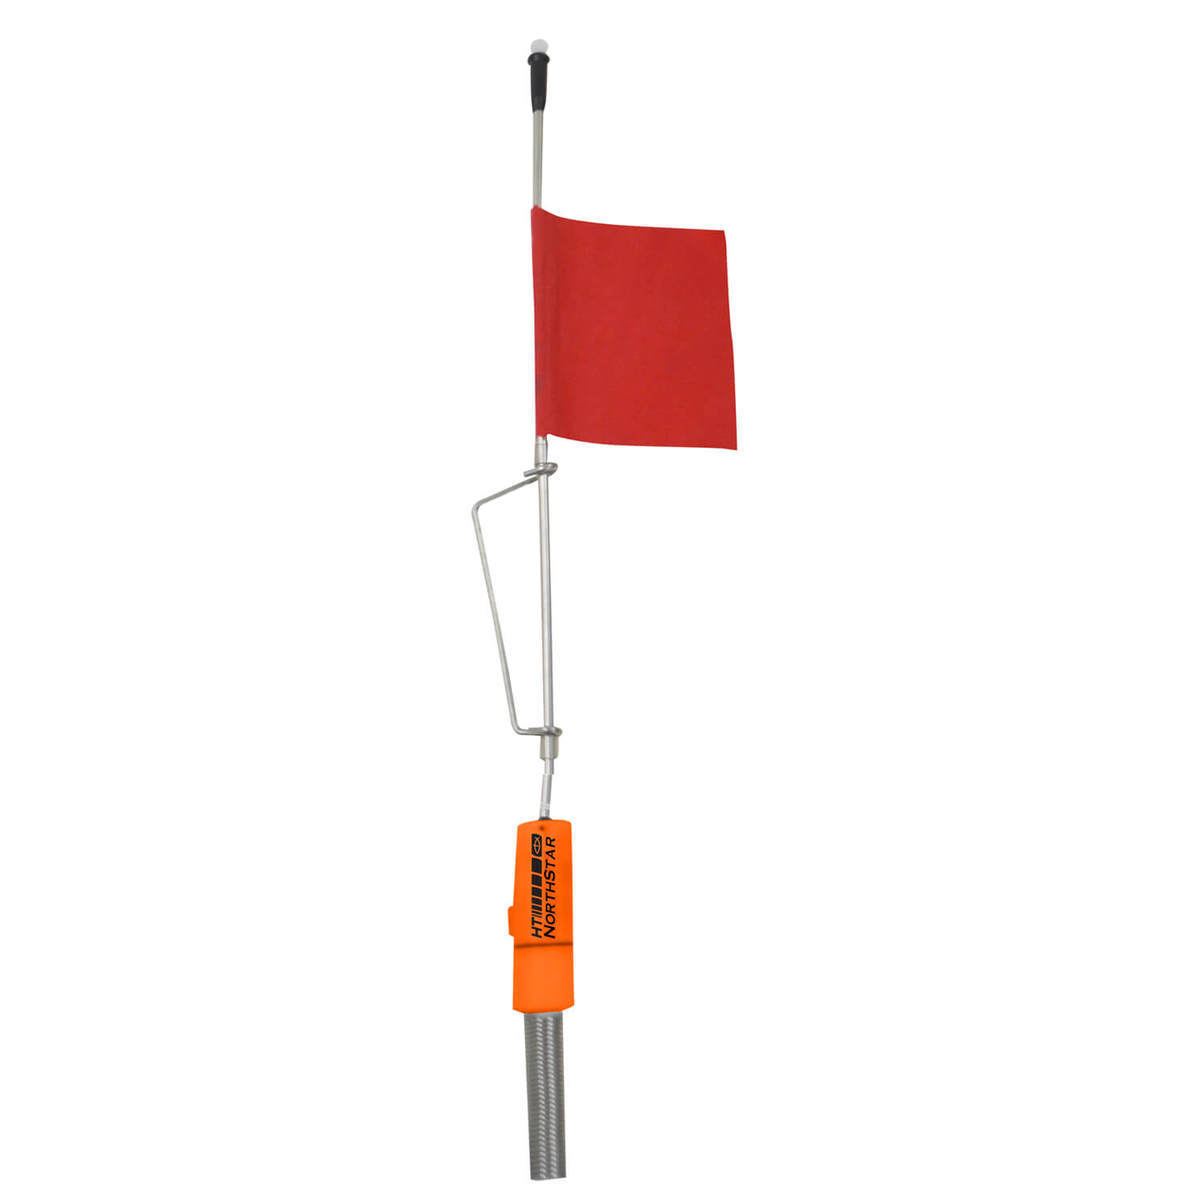 6pcs/set Tip Up Ice Fishing Pole Convenient Braking System Automatically  Winter Ice Fishing Flag Indicator